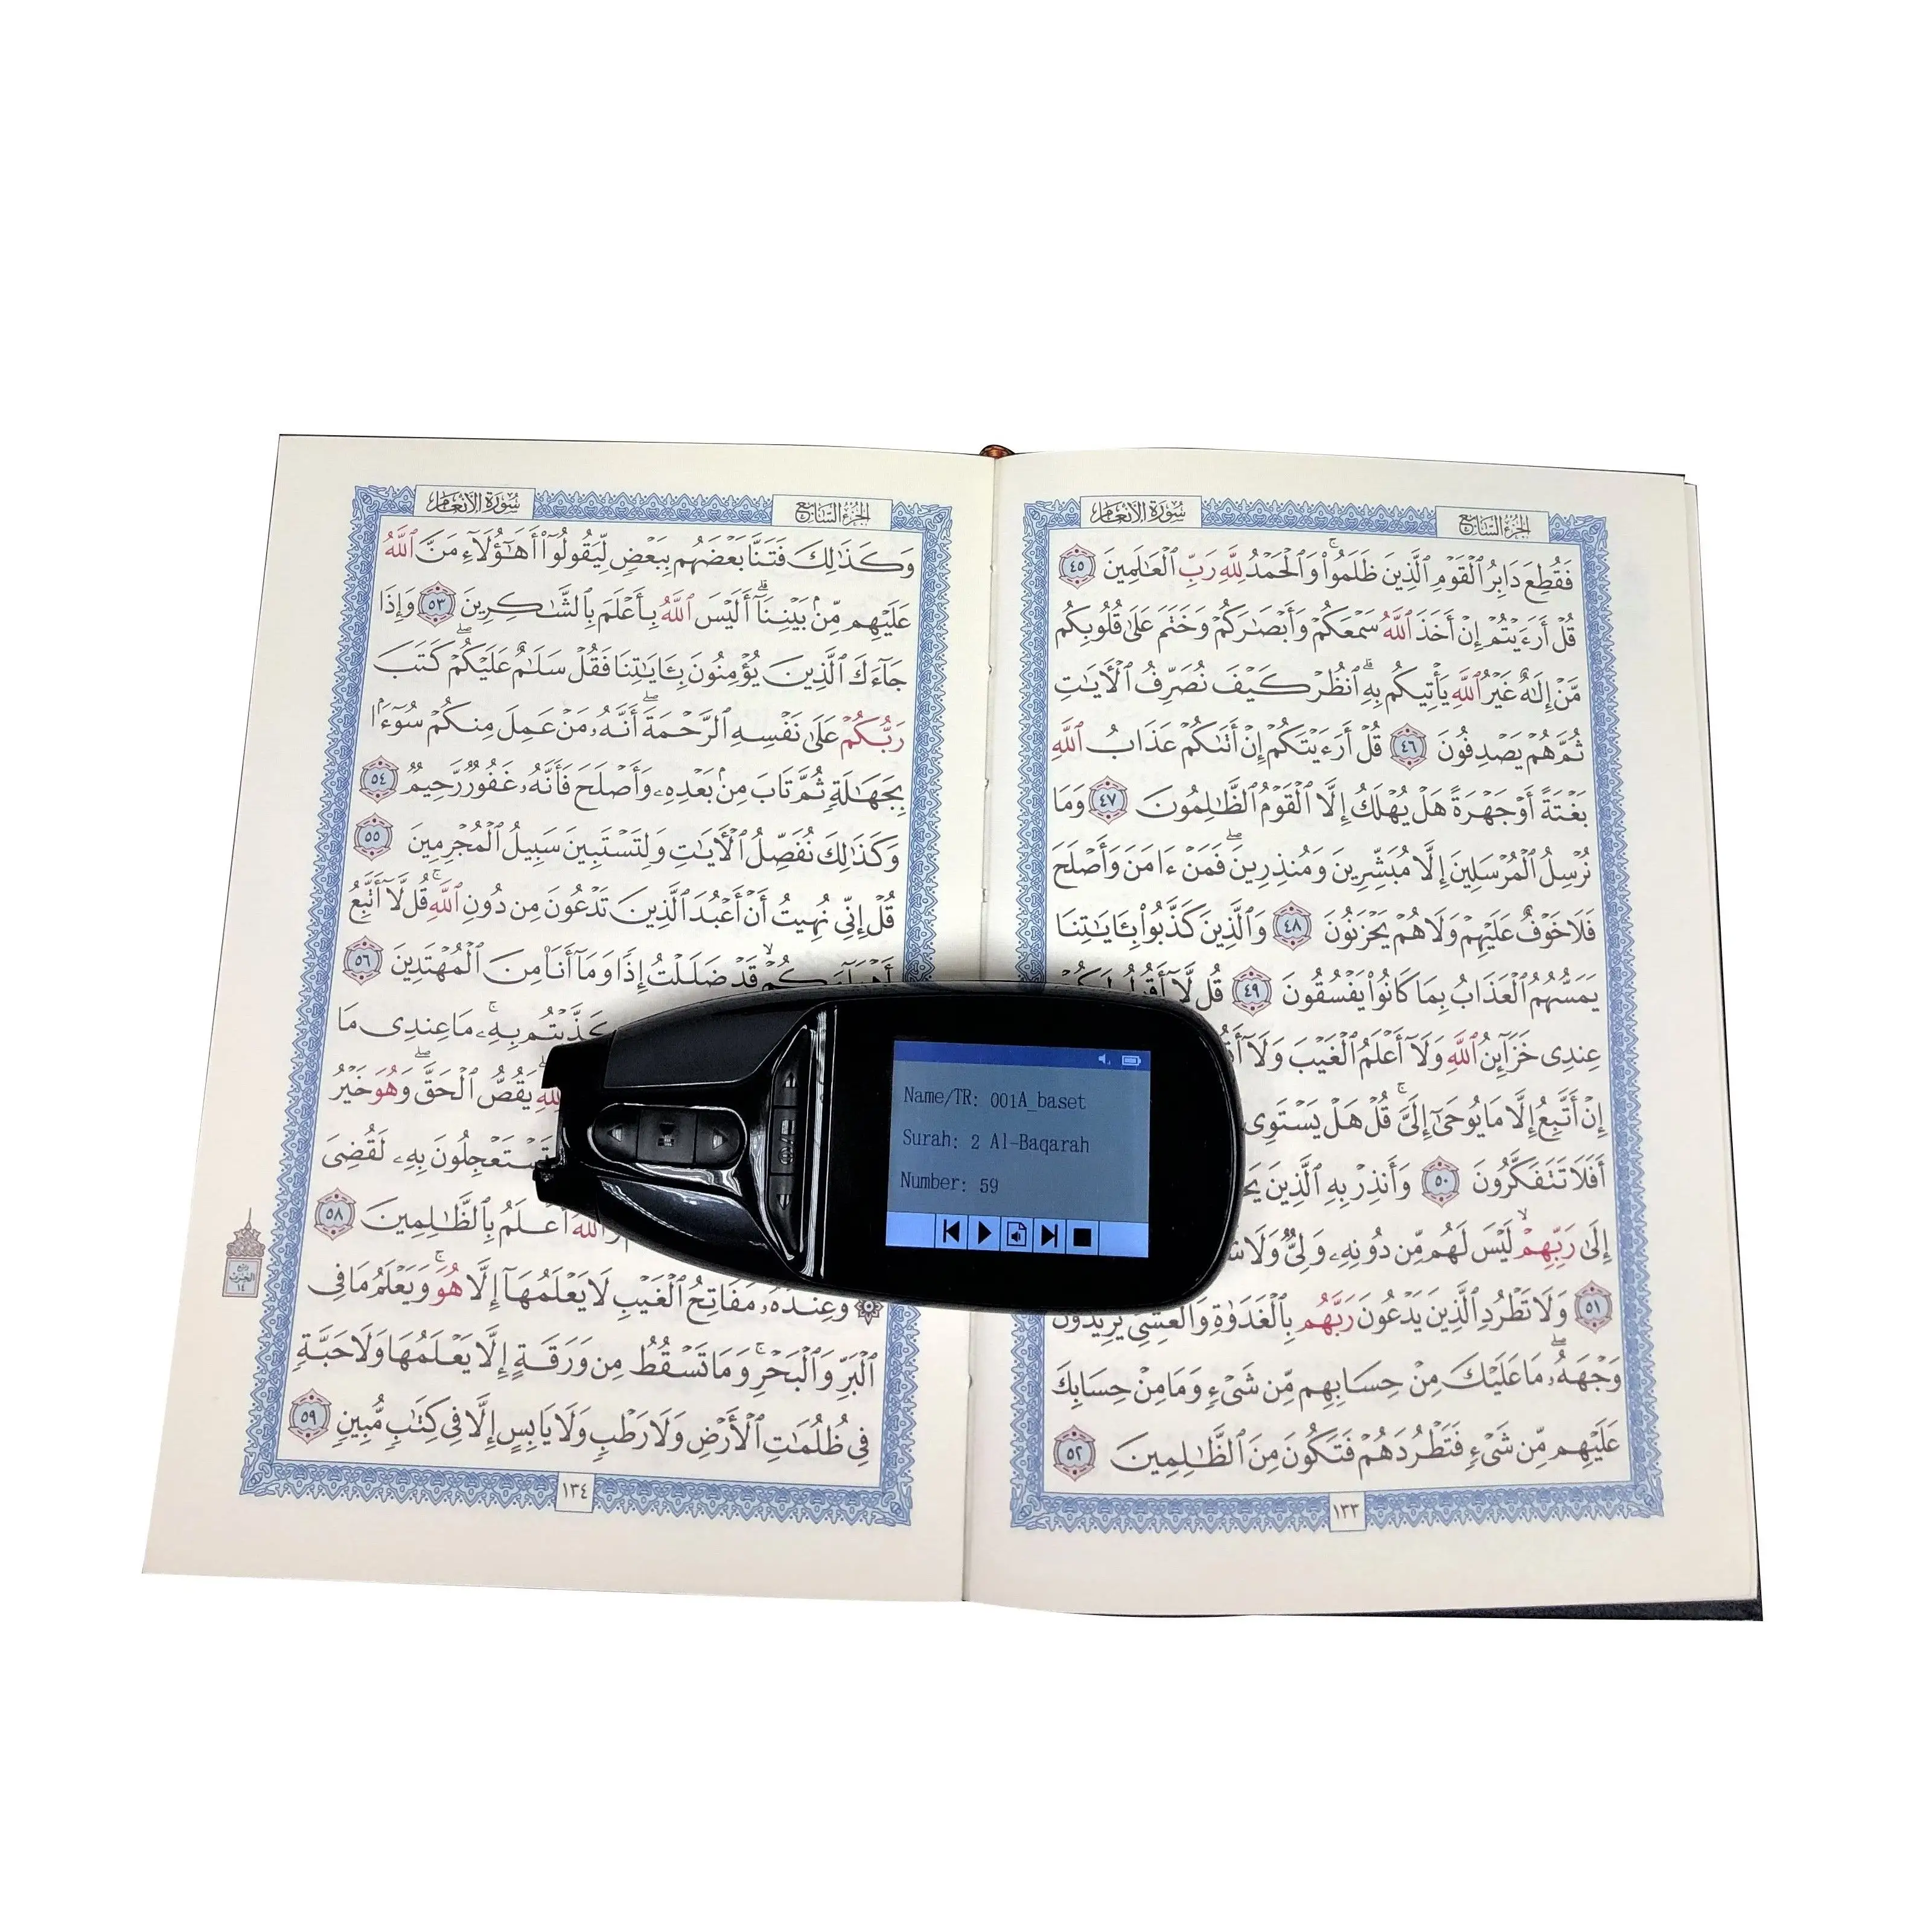 Quran Digital Reading Translation Pen with big screen color display- XY1862